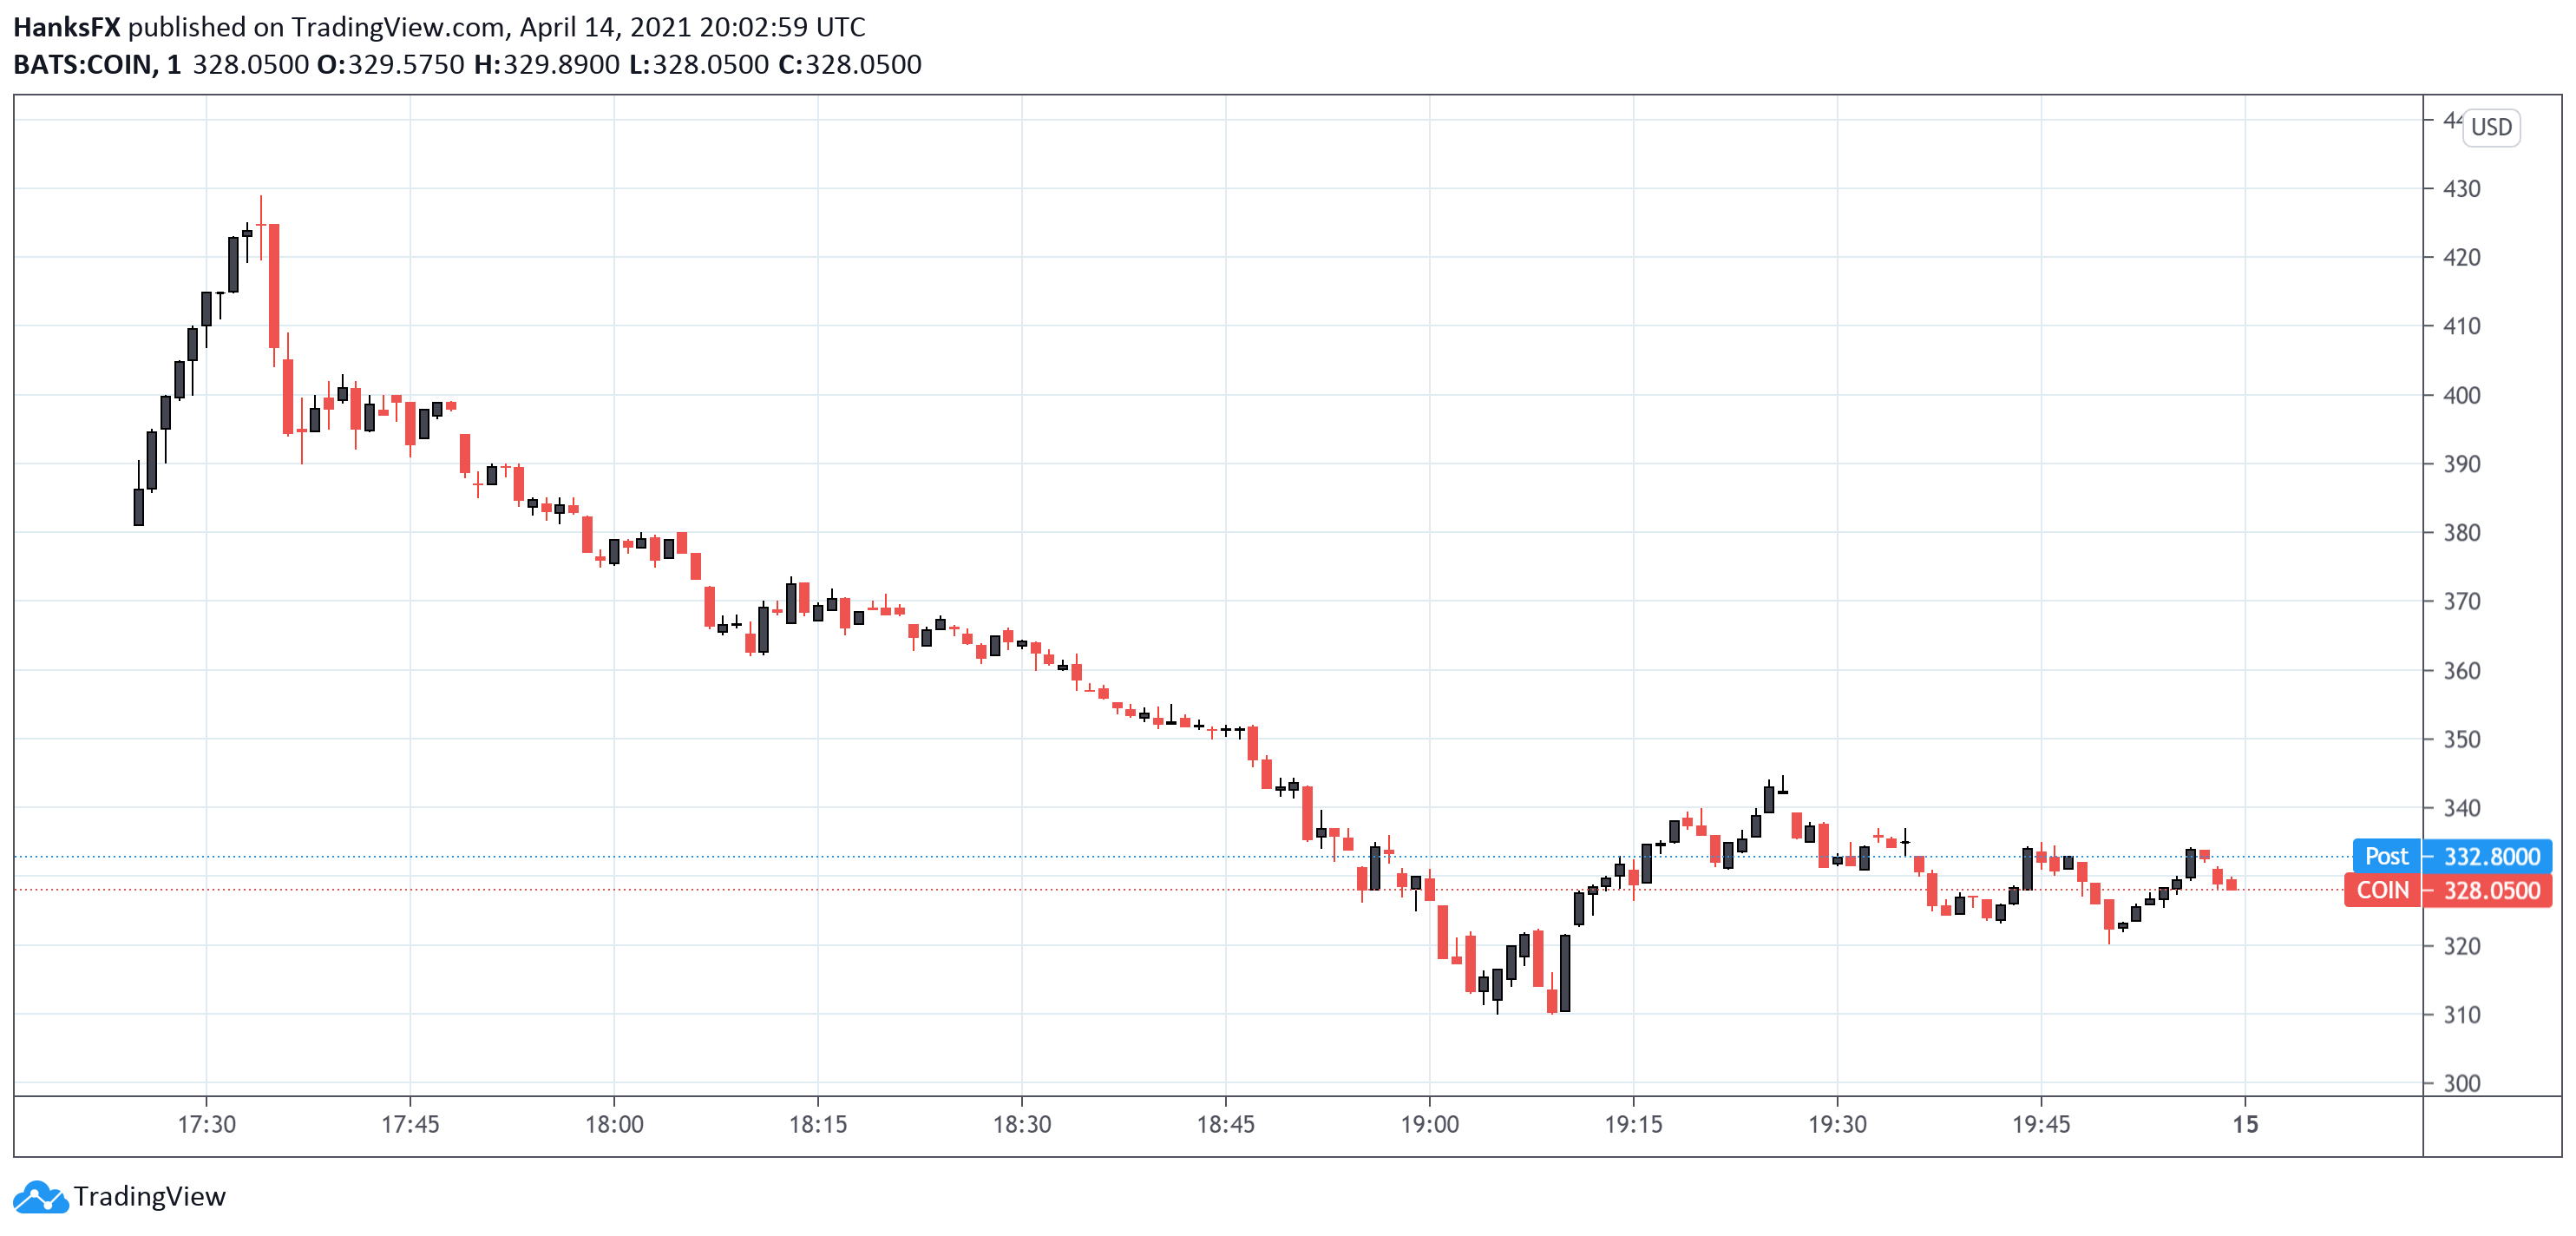 coinbase stock forecast 2021